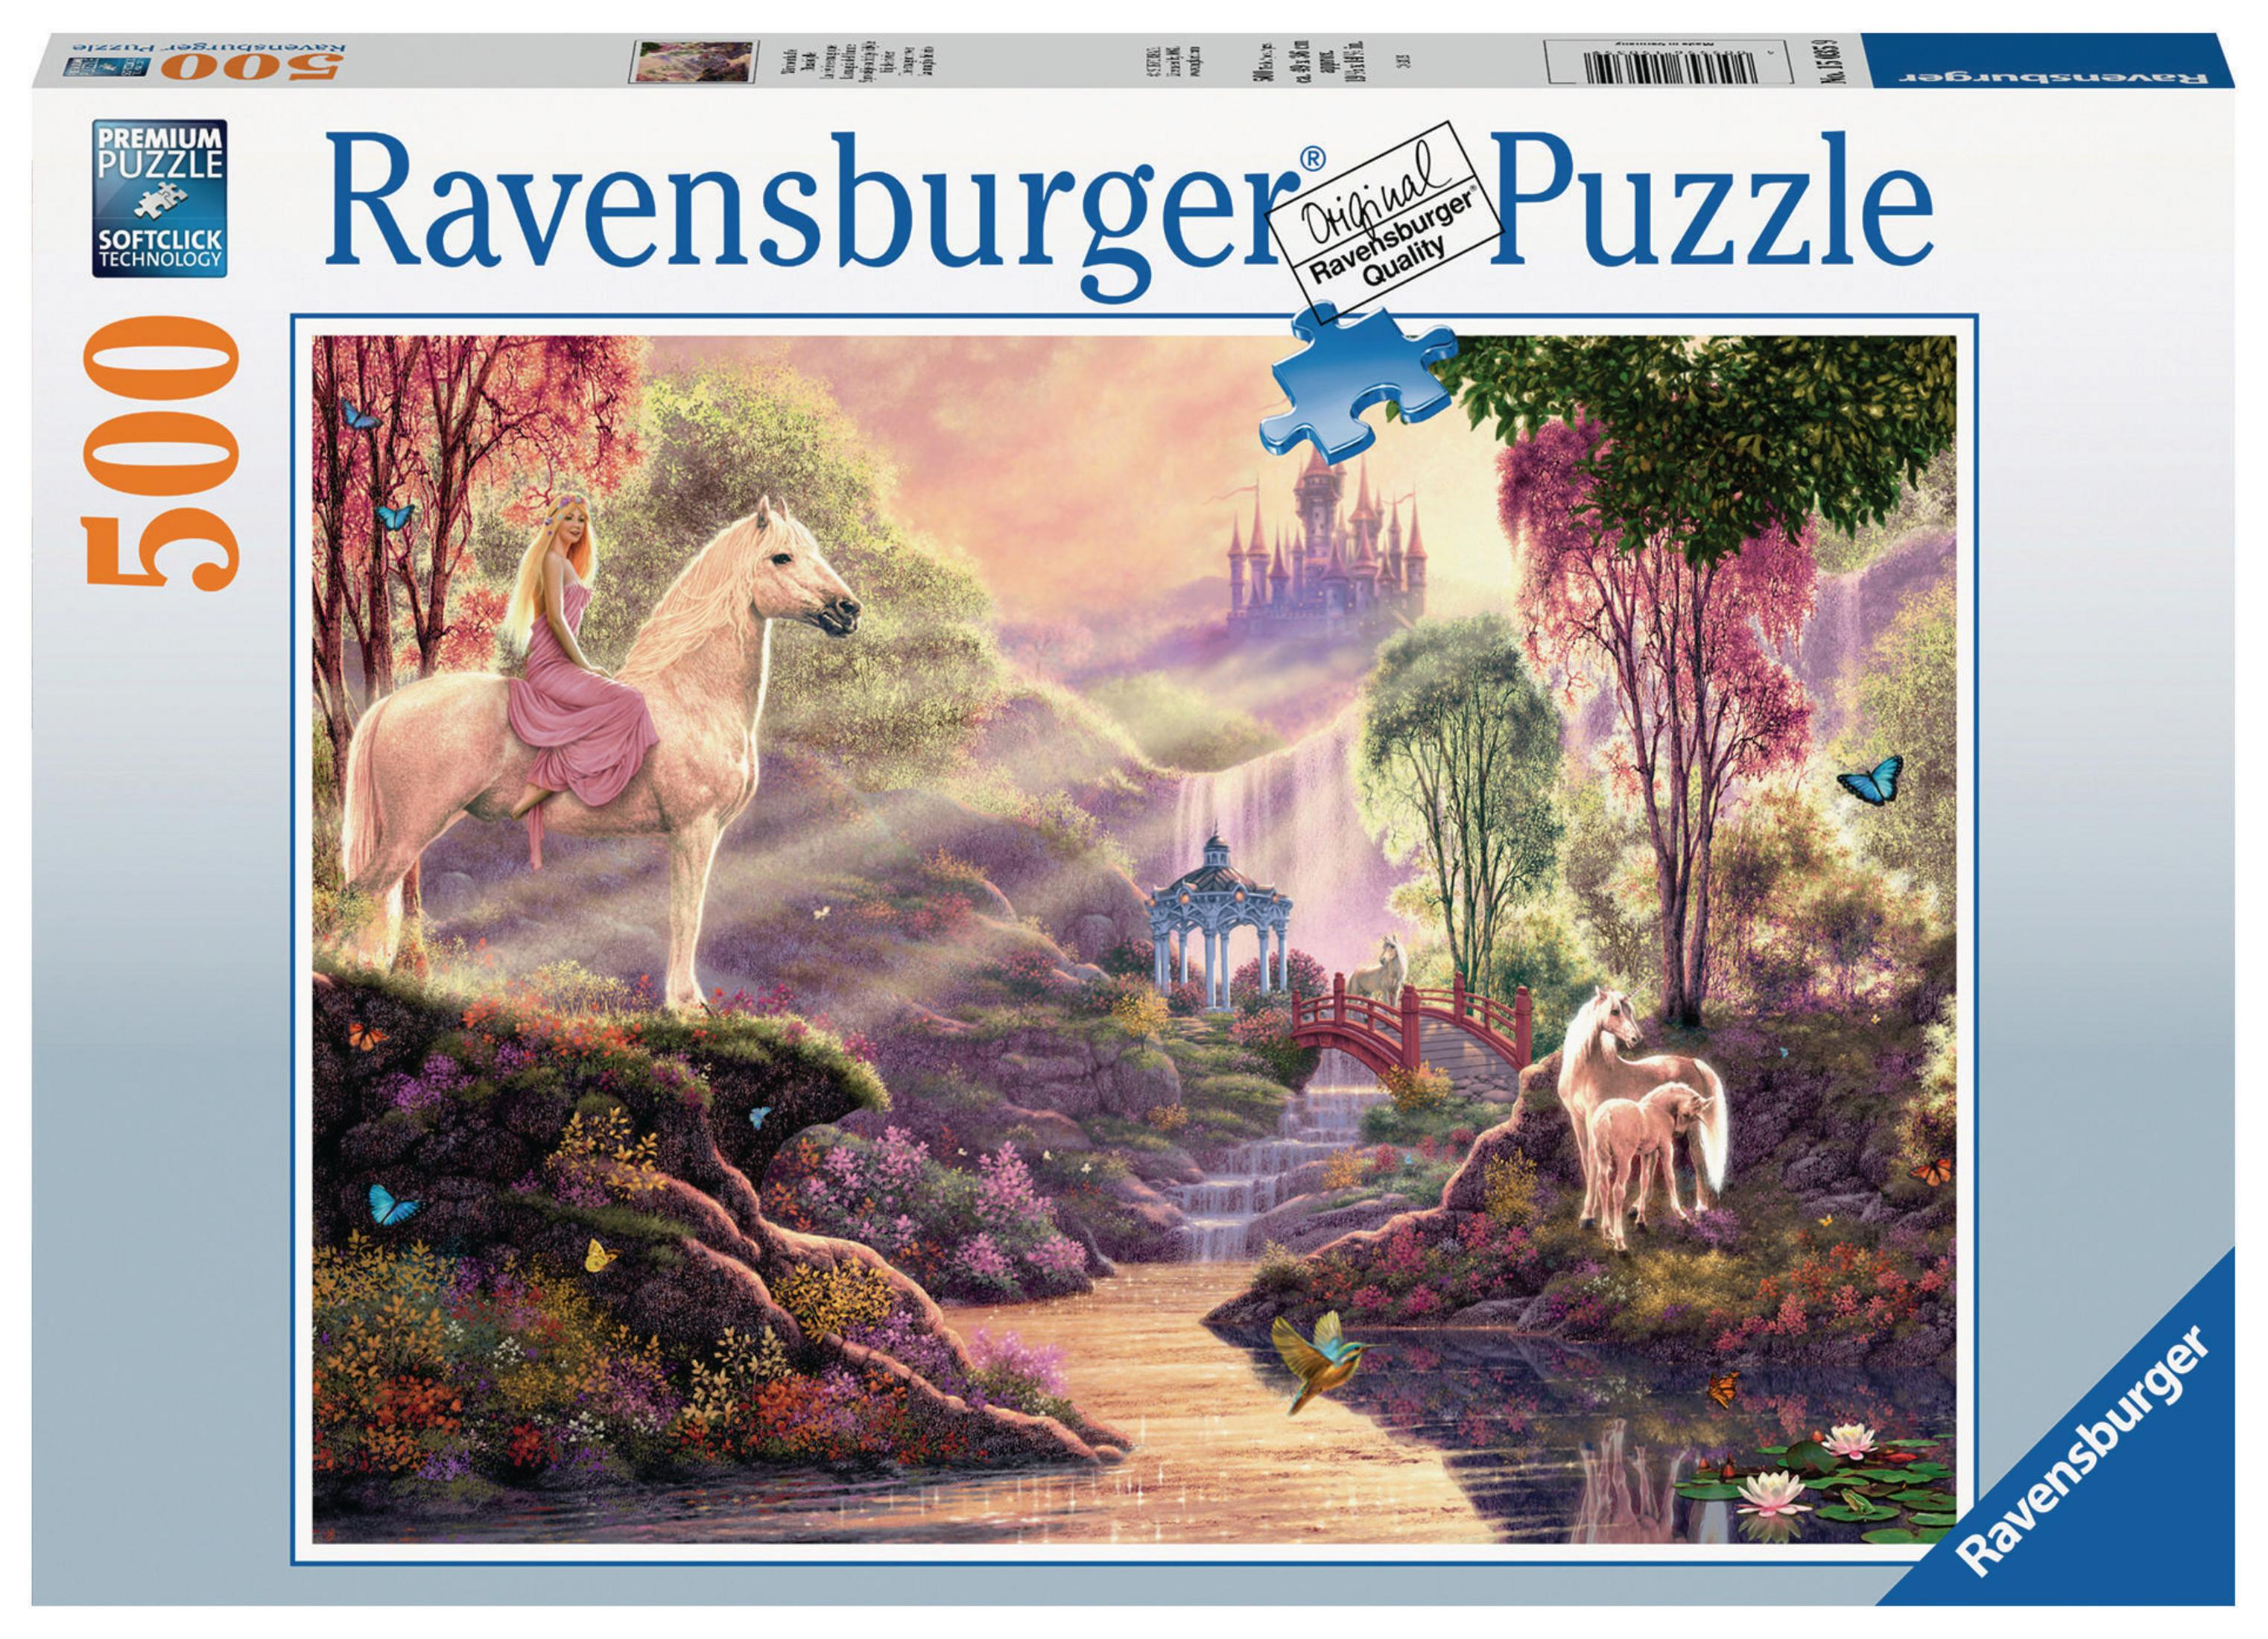 MÄRCHENHAFTE RAVENSBURGER 15035 FLUSSIDYLLE Puzzle